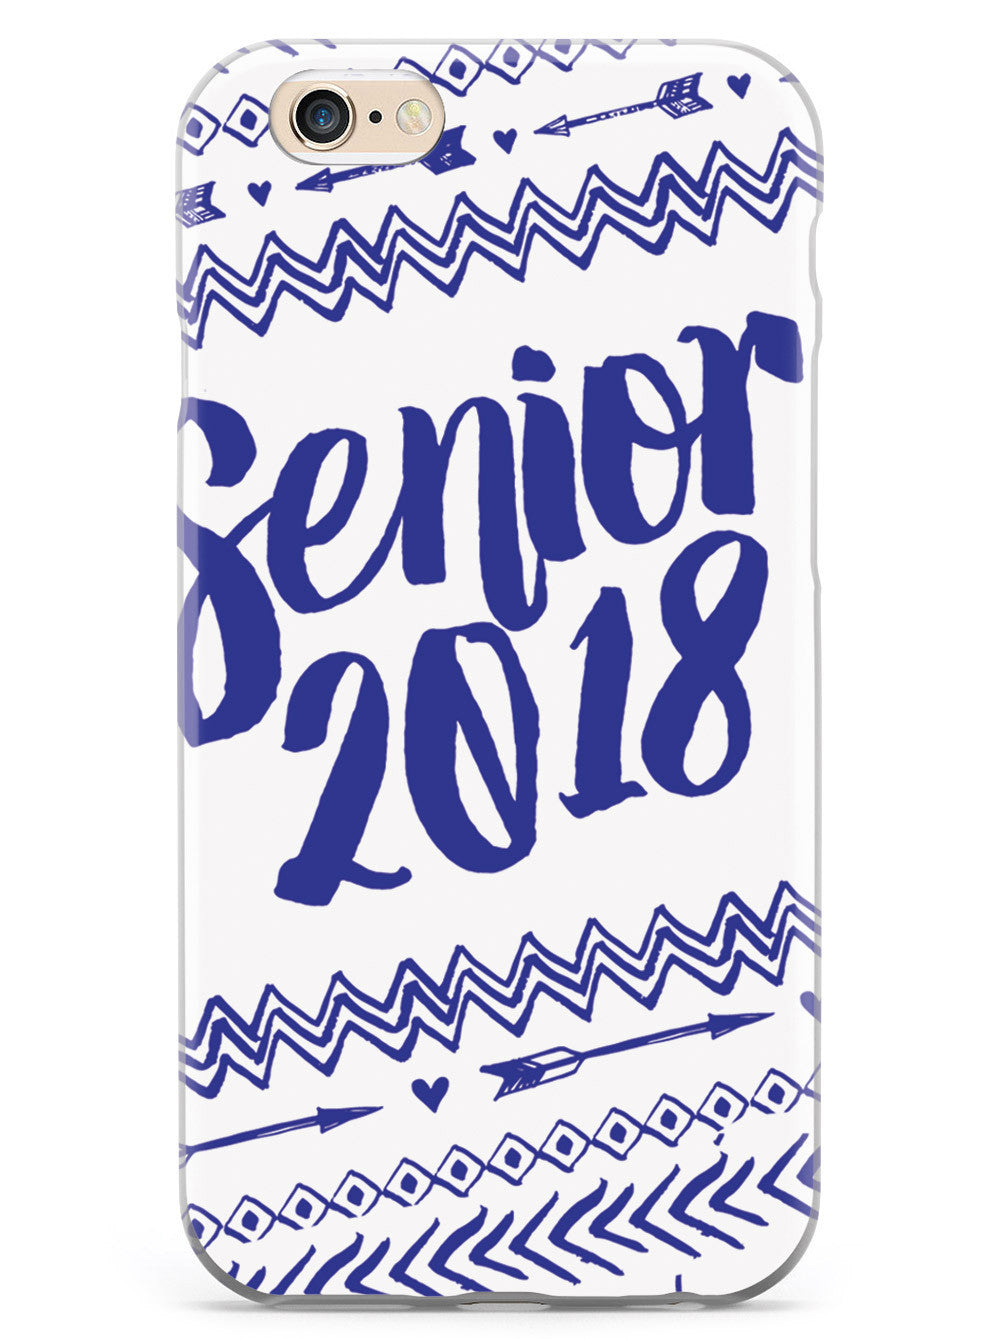 Senior 2018 - Blue Case